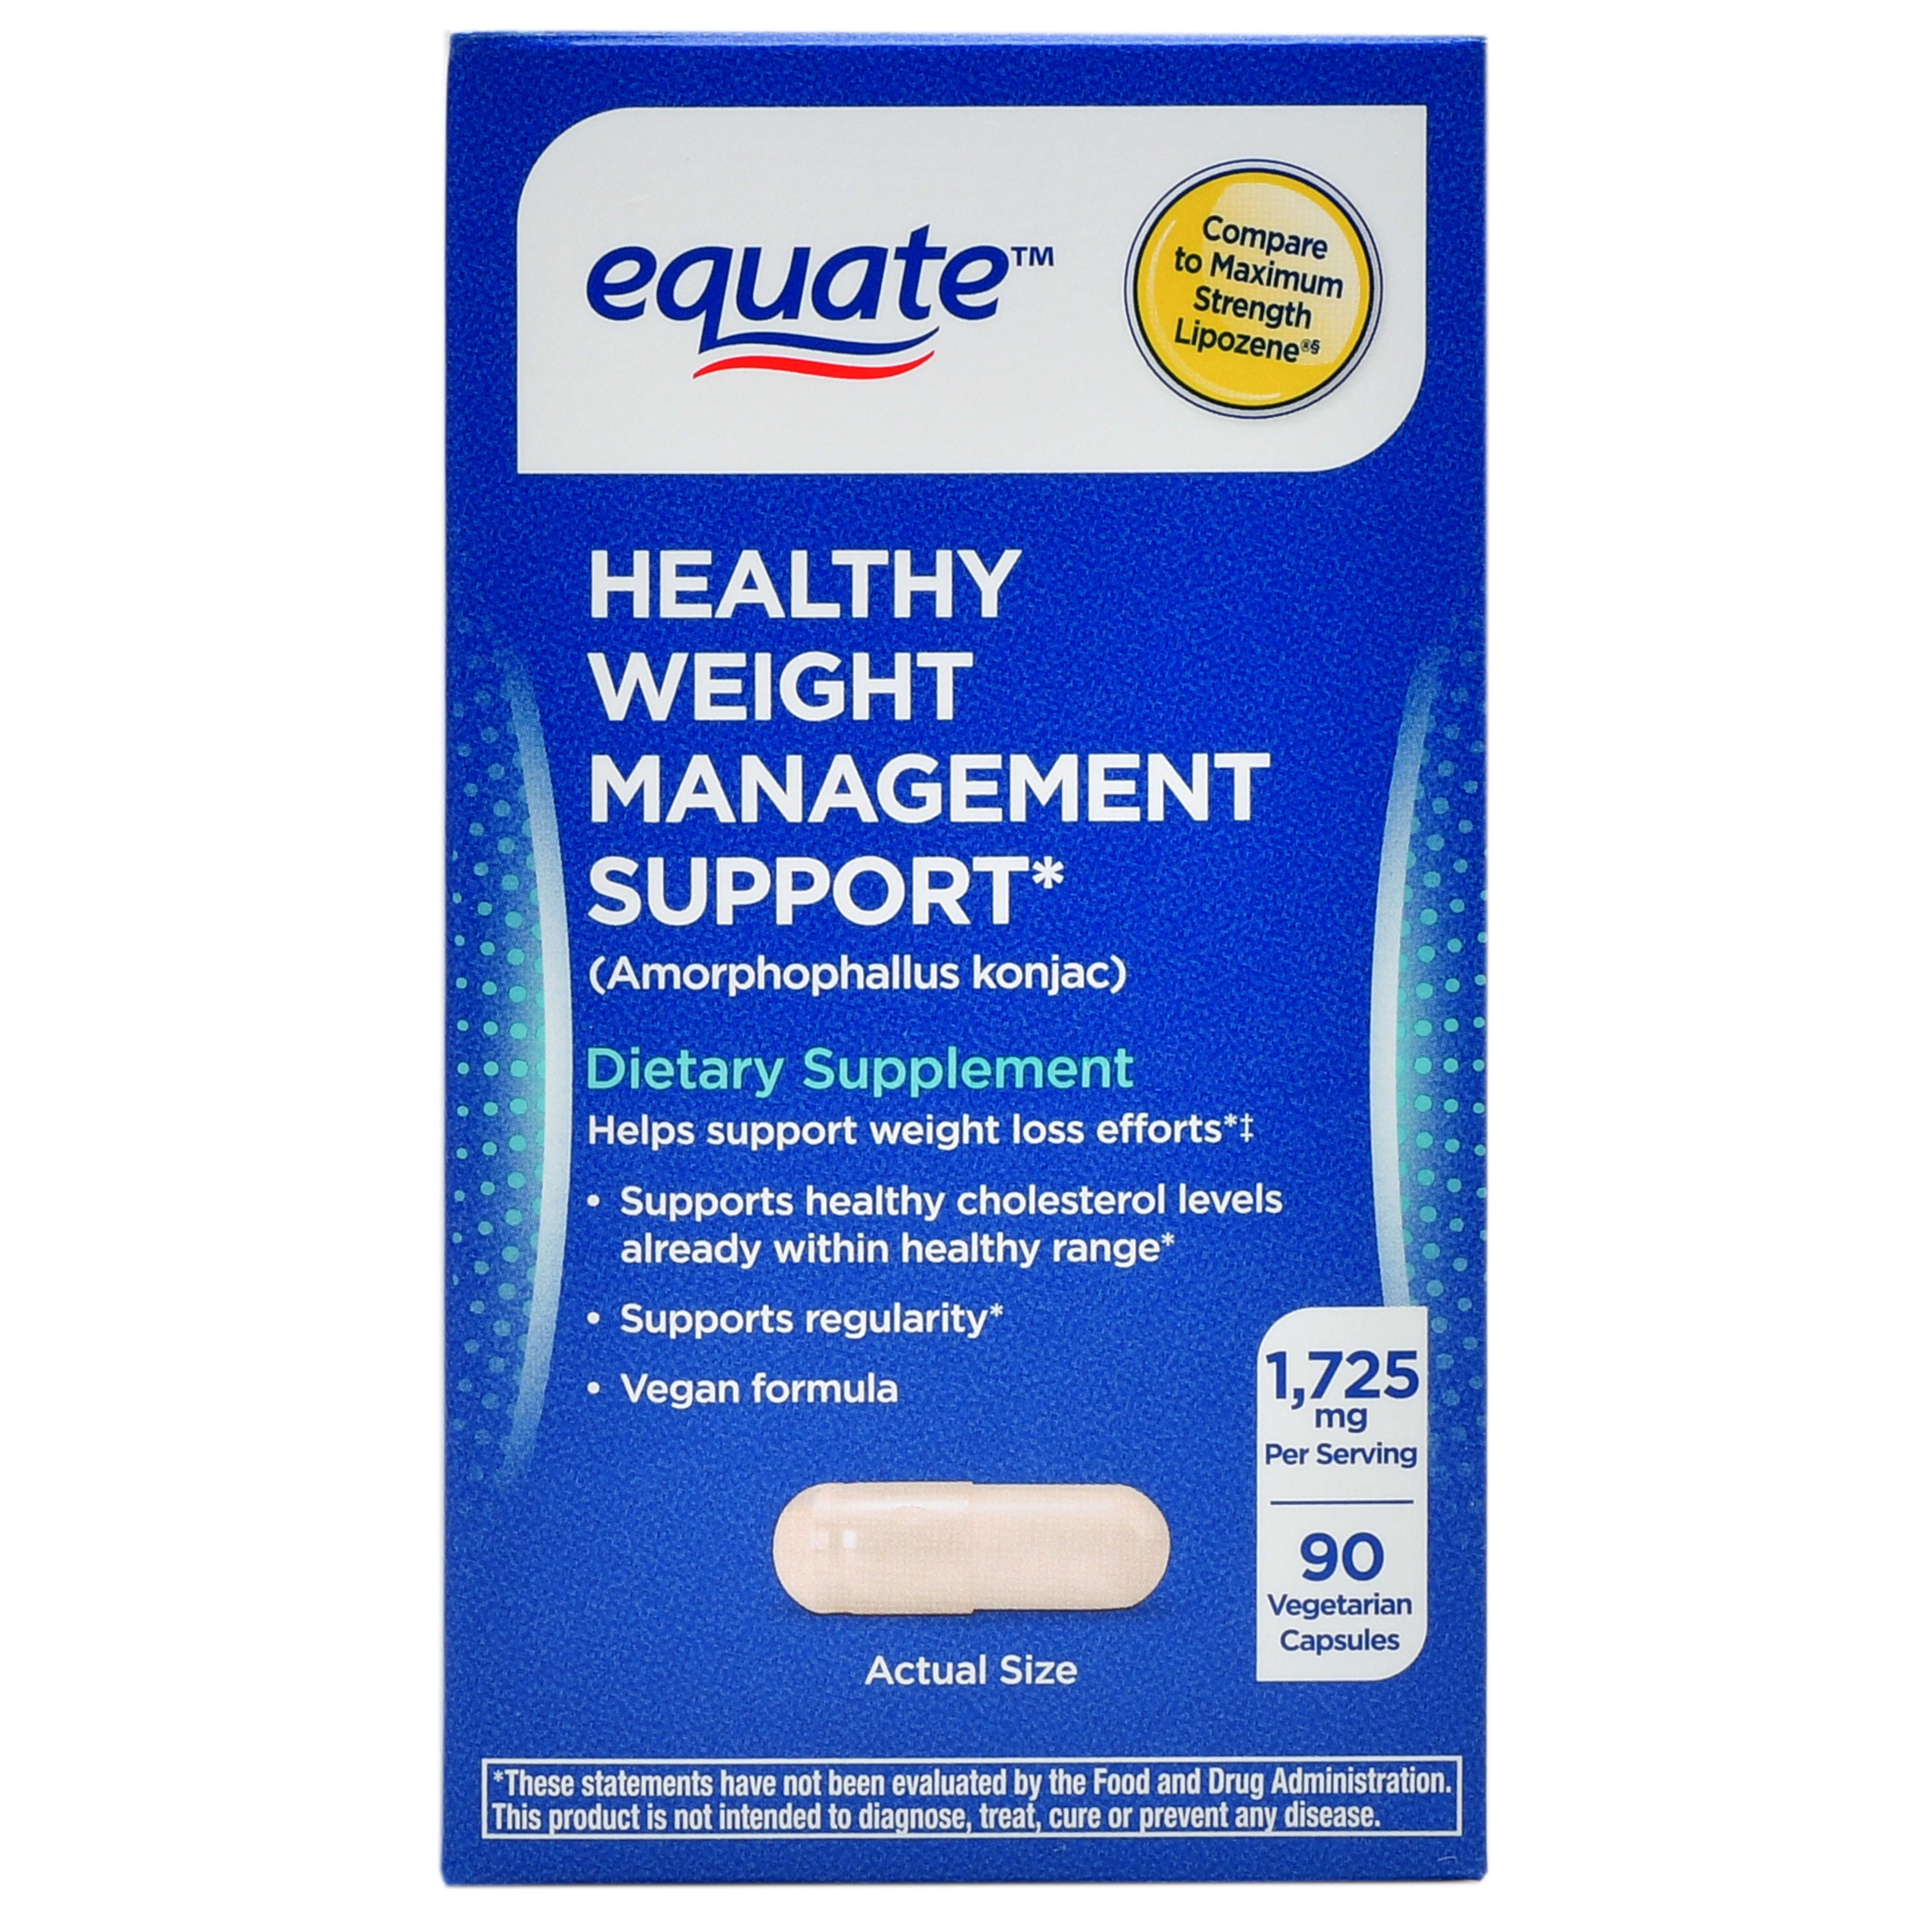 Weight management support